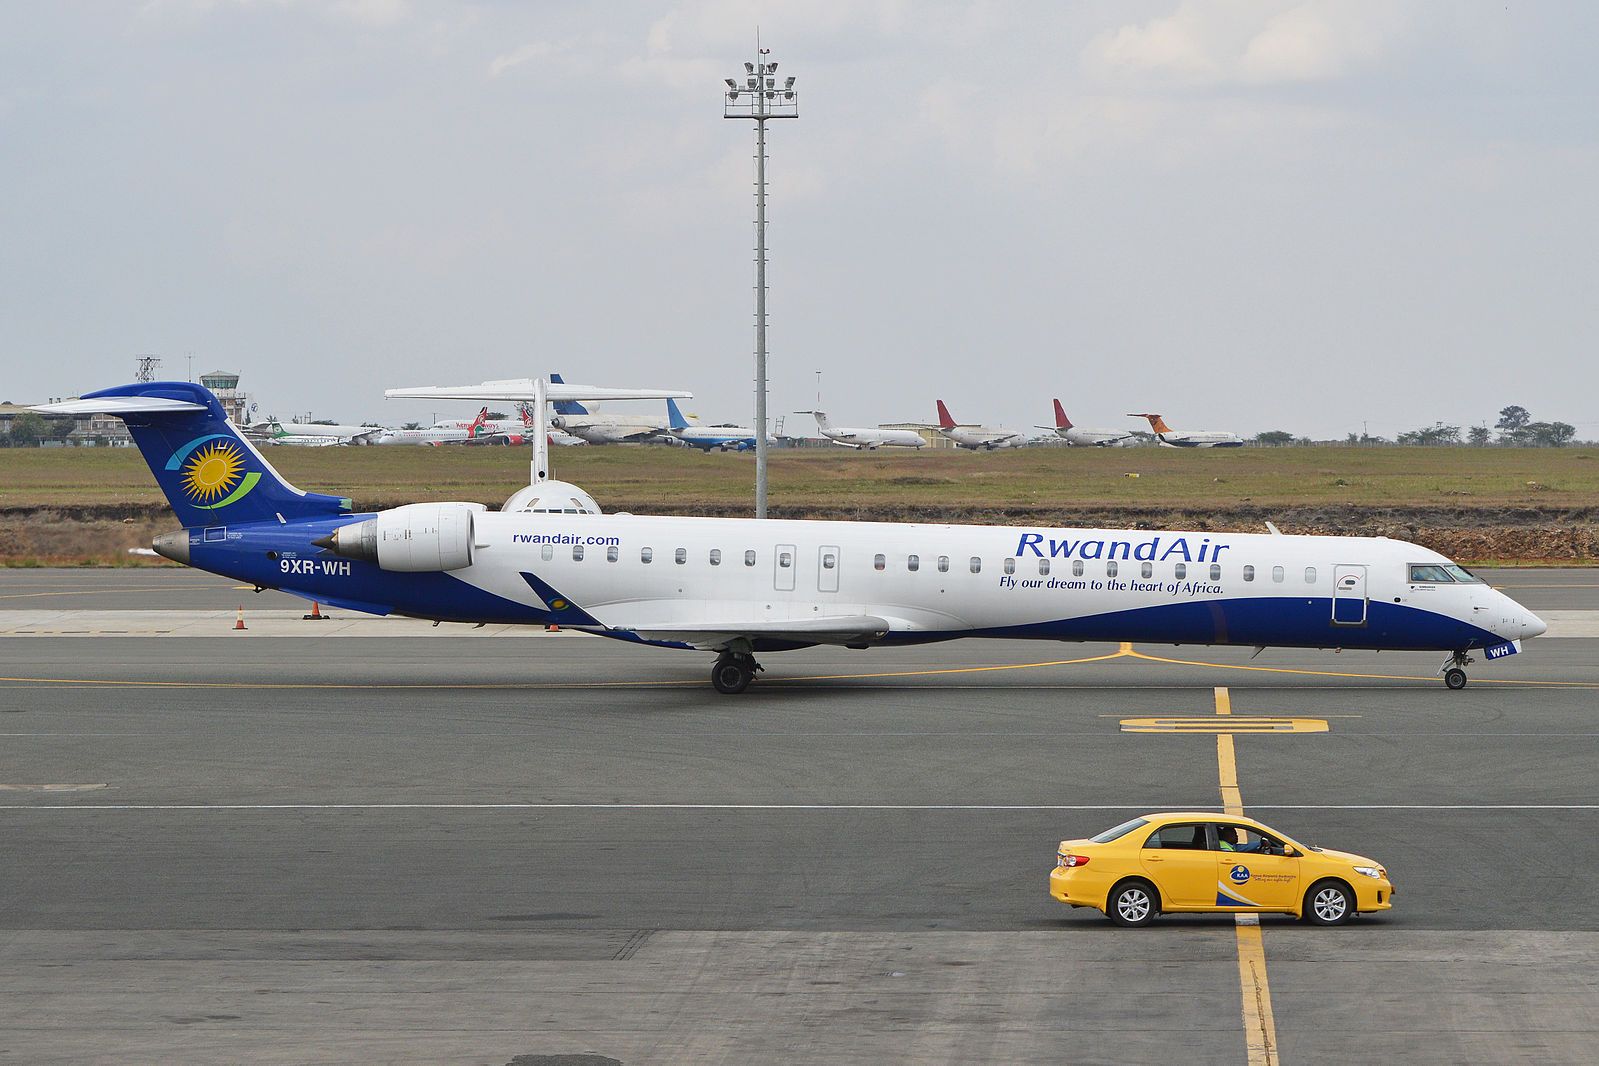 Bombardier CRJ-900 '9XR-WH' Rwandair